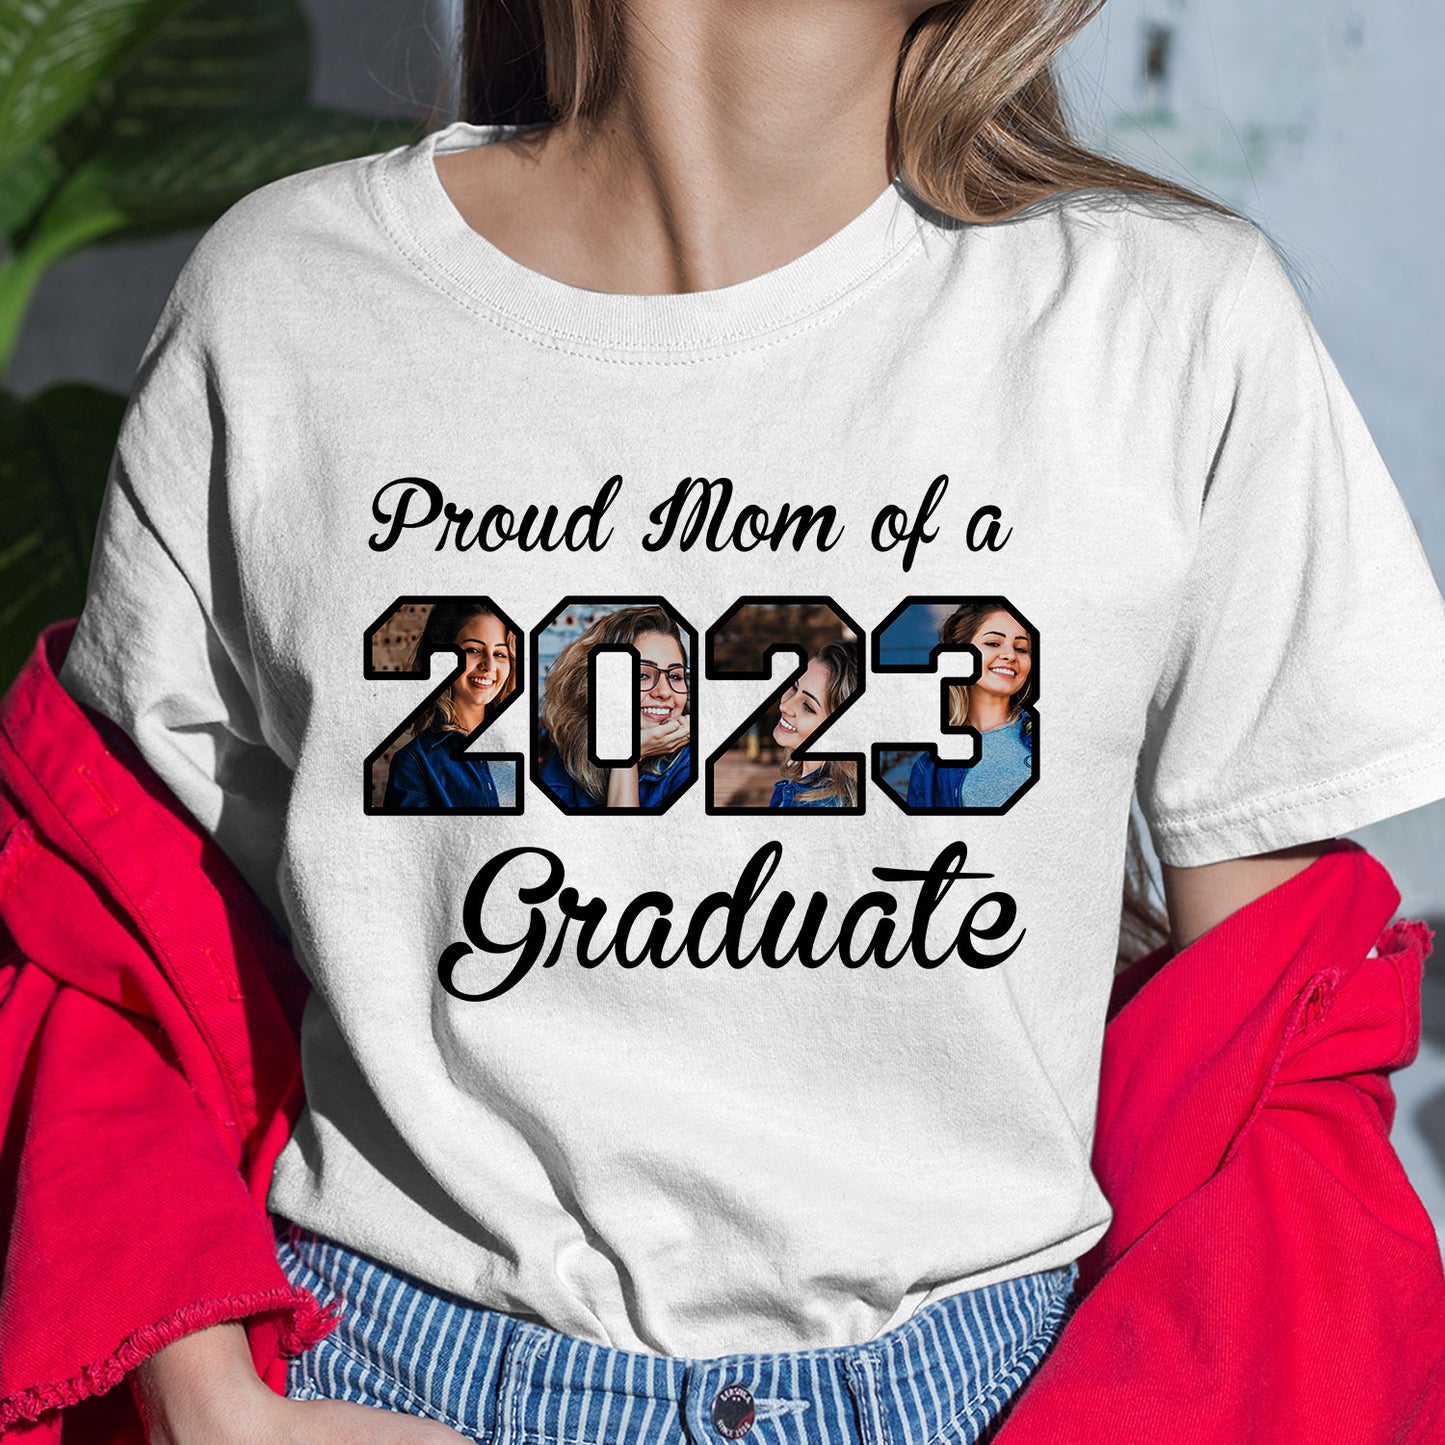 Proud Mom of 2023 Graduate Personalized Custom Image Tshirt